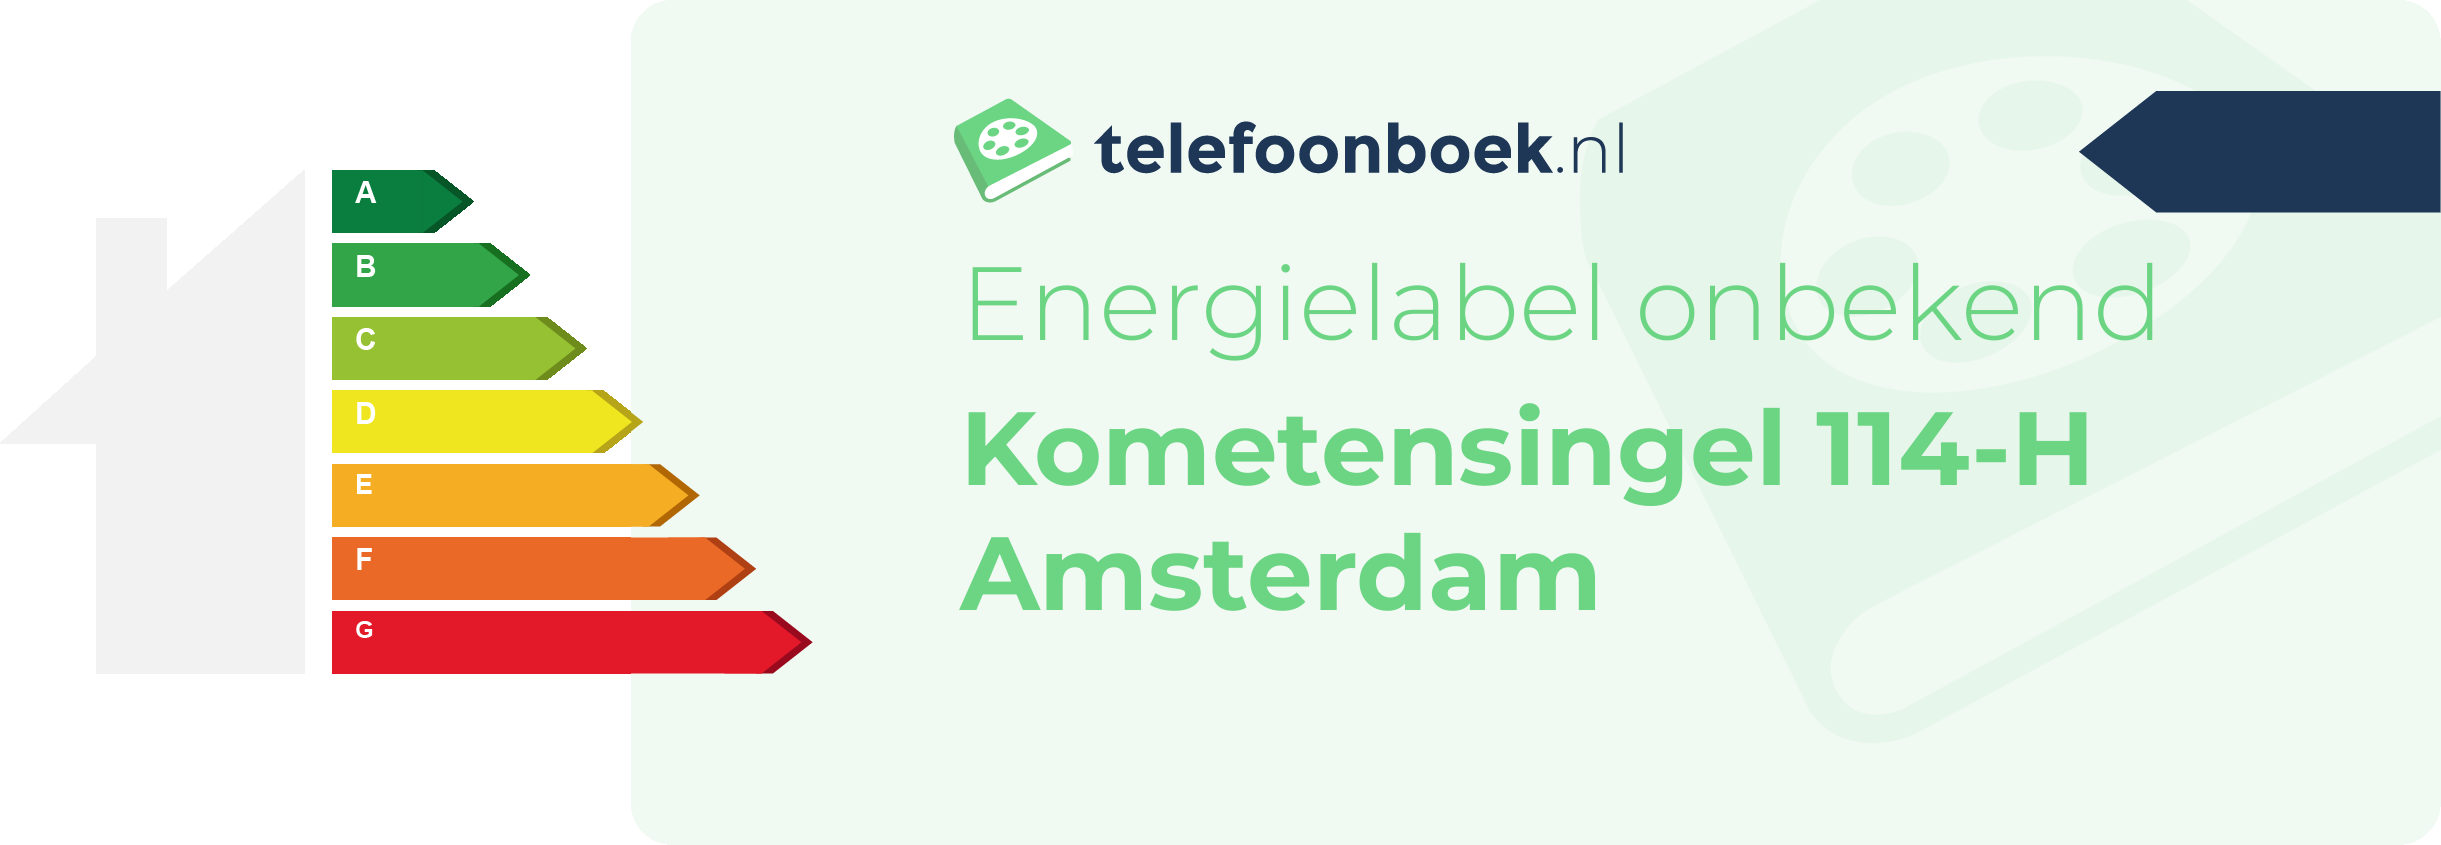 Energielabel Kometensingel 114-H Amsterdam